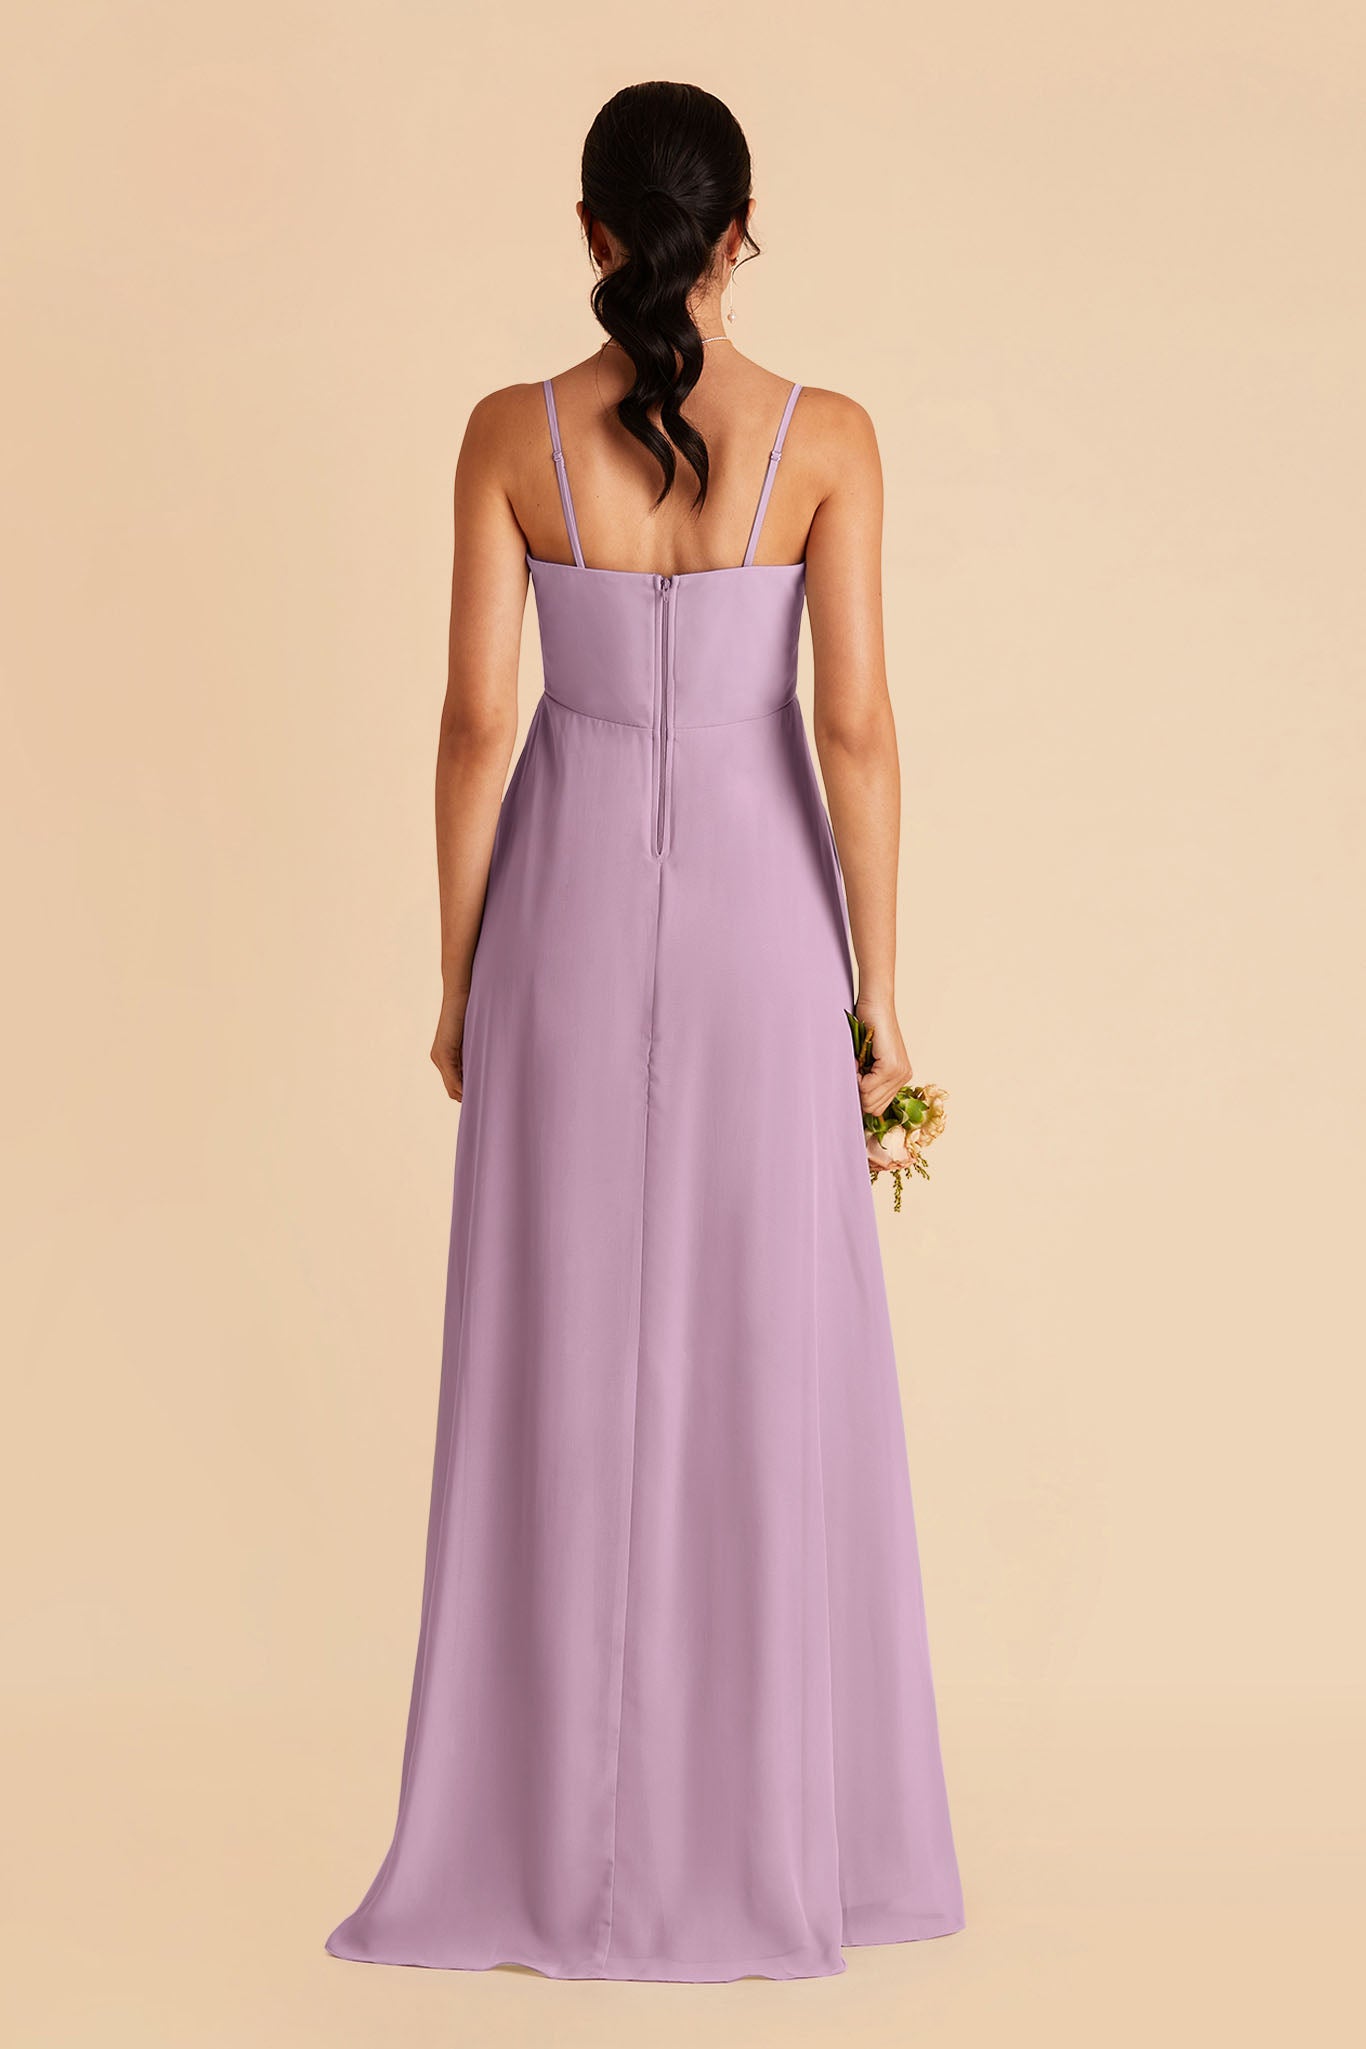 Lavender Winnie Convertible Chiffon Dress by Birdy Grey